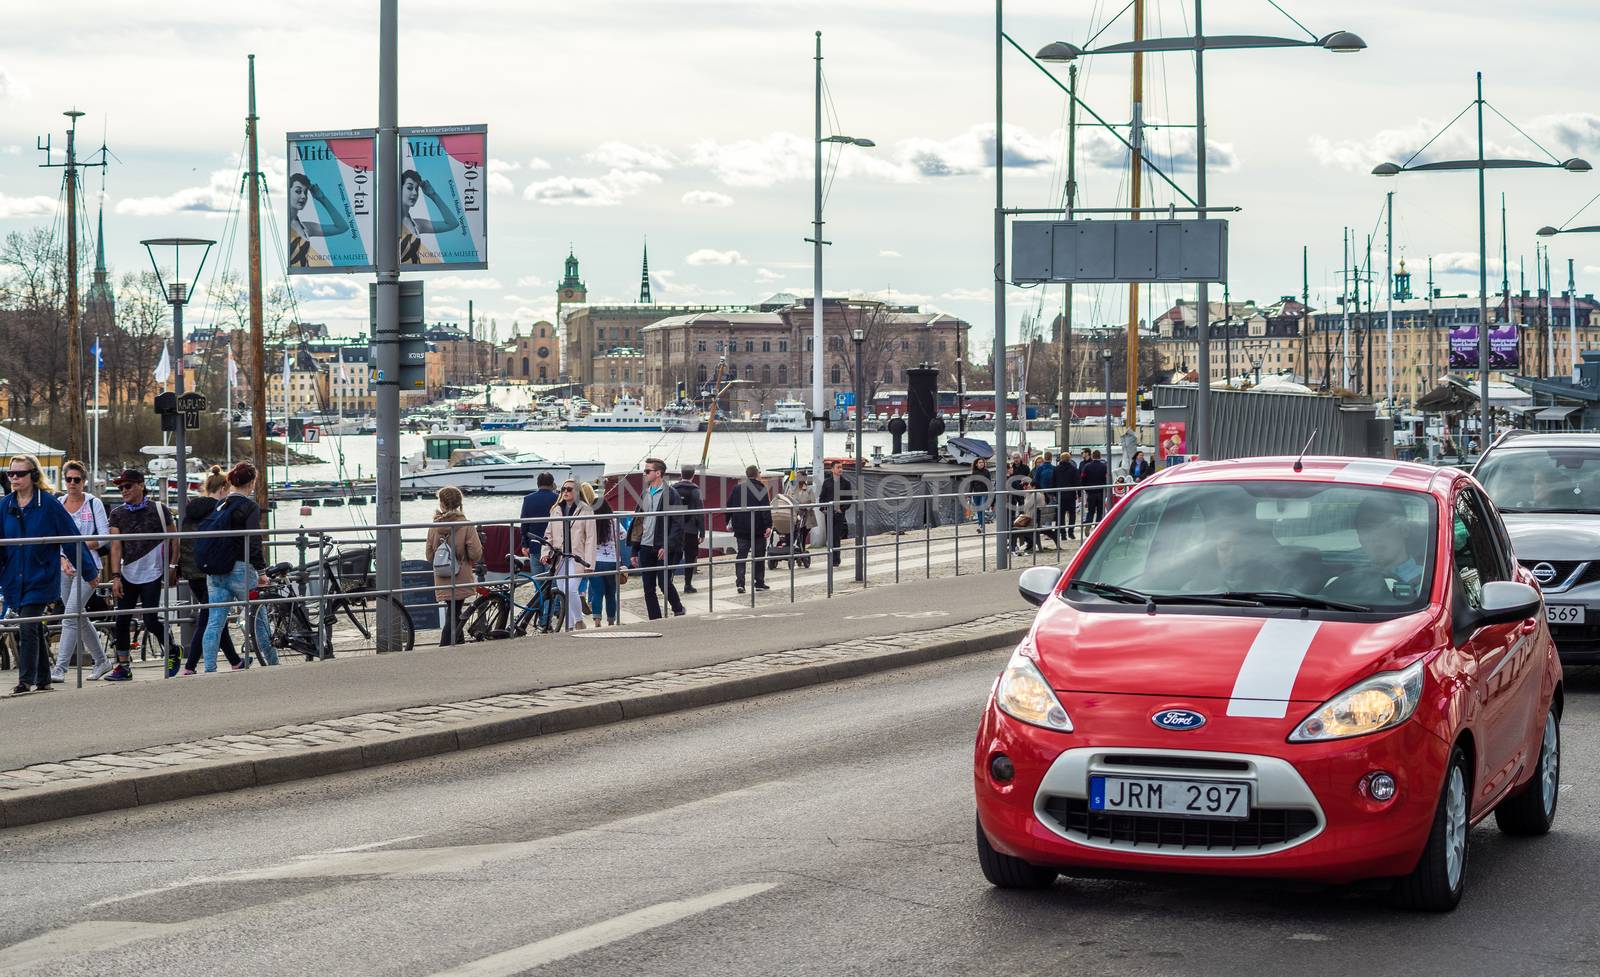 April 22, 2018, Stockholm, Sweden. A red car on one of the streets in Stockholm.